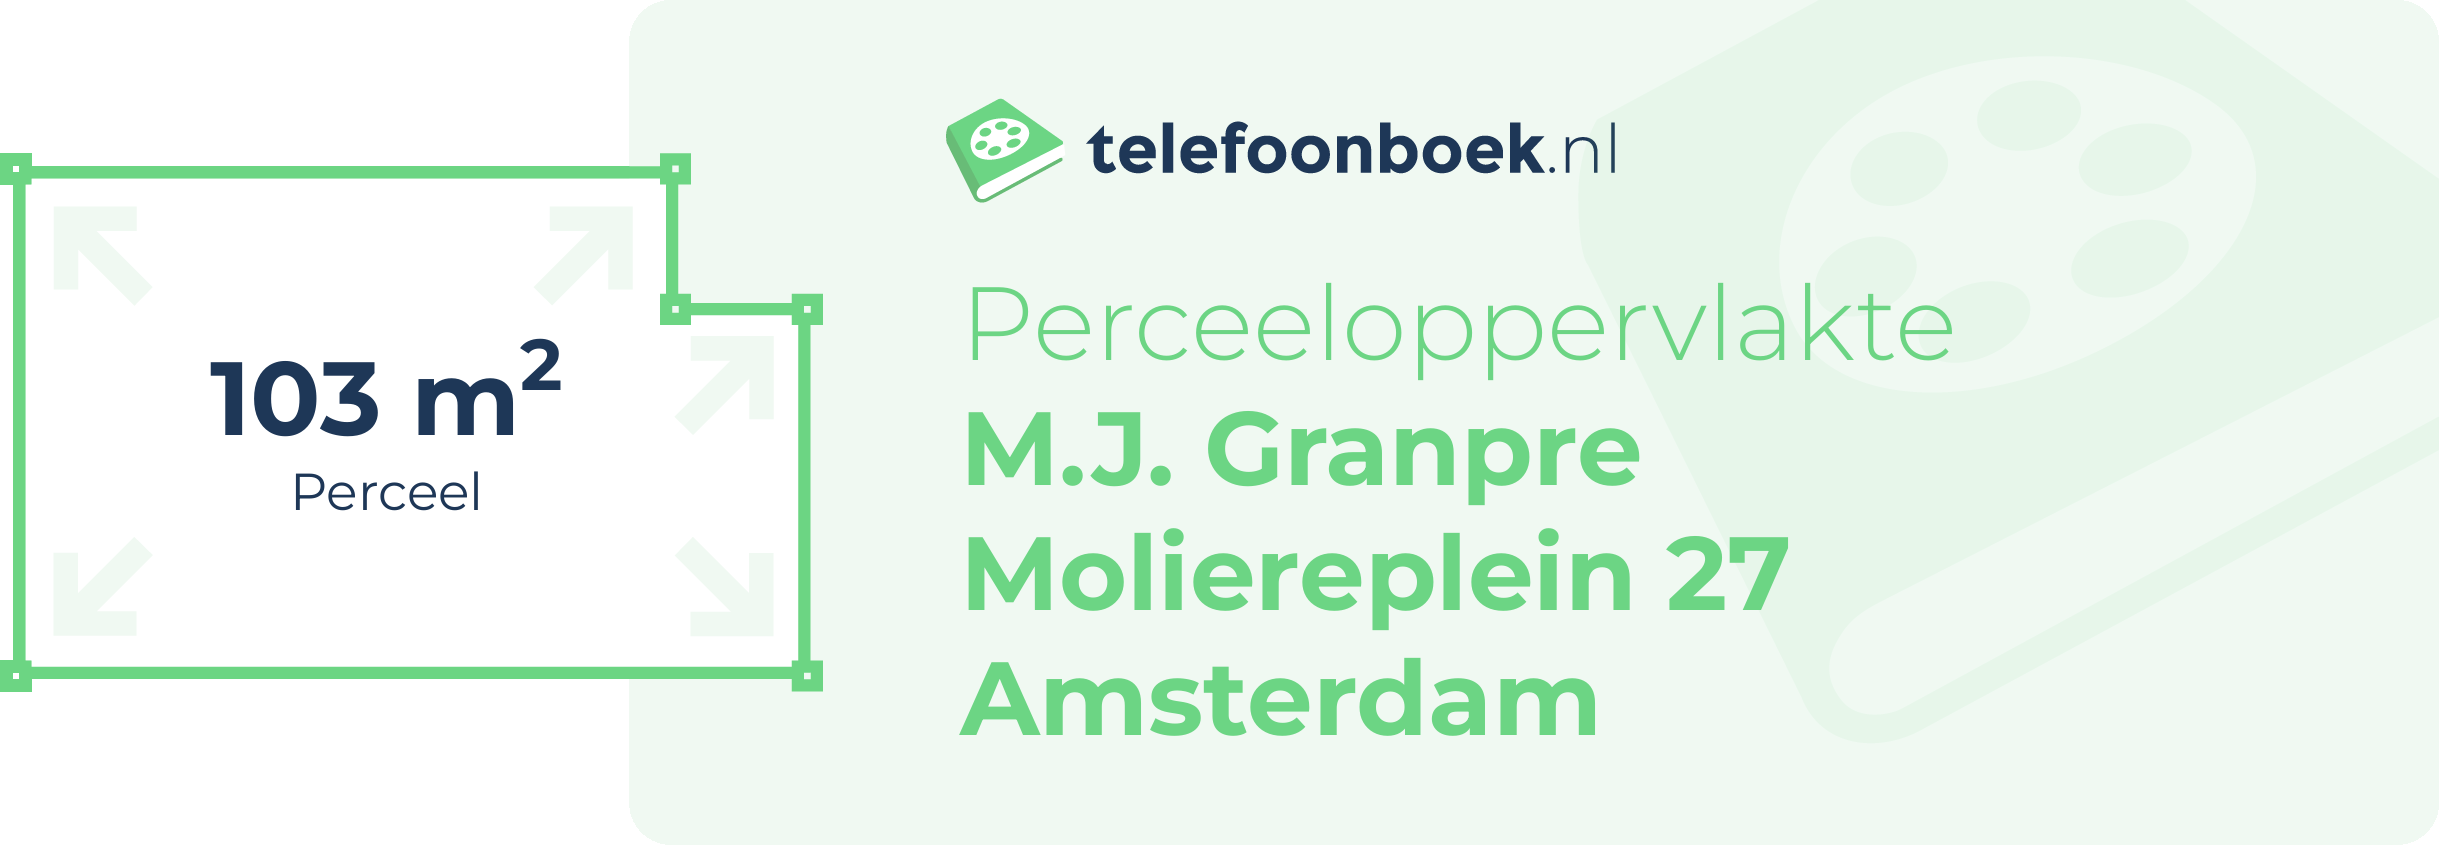 Perceeloppervlakte M.J. Granpre Moliereplein 27 Amsterdam